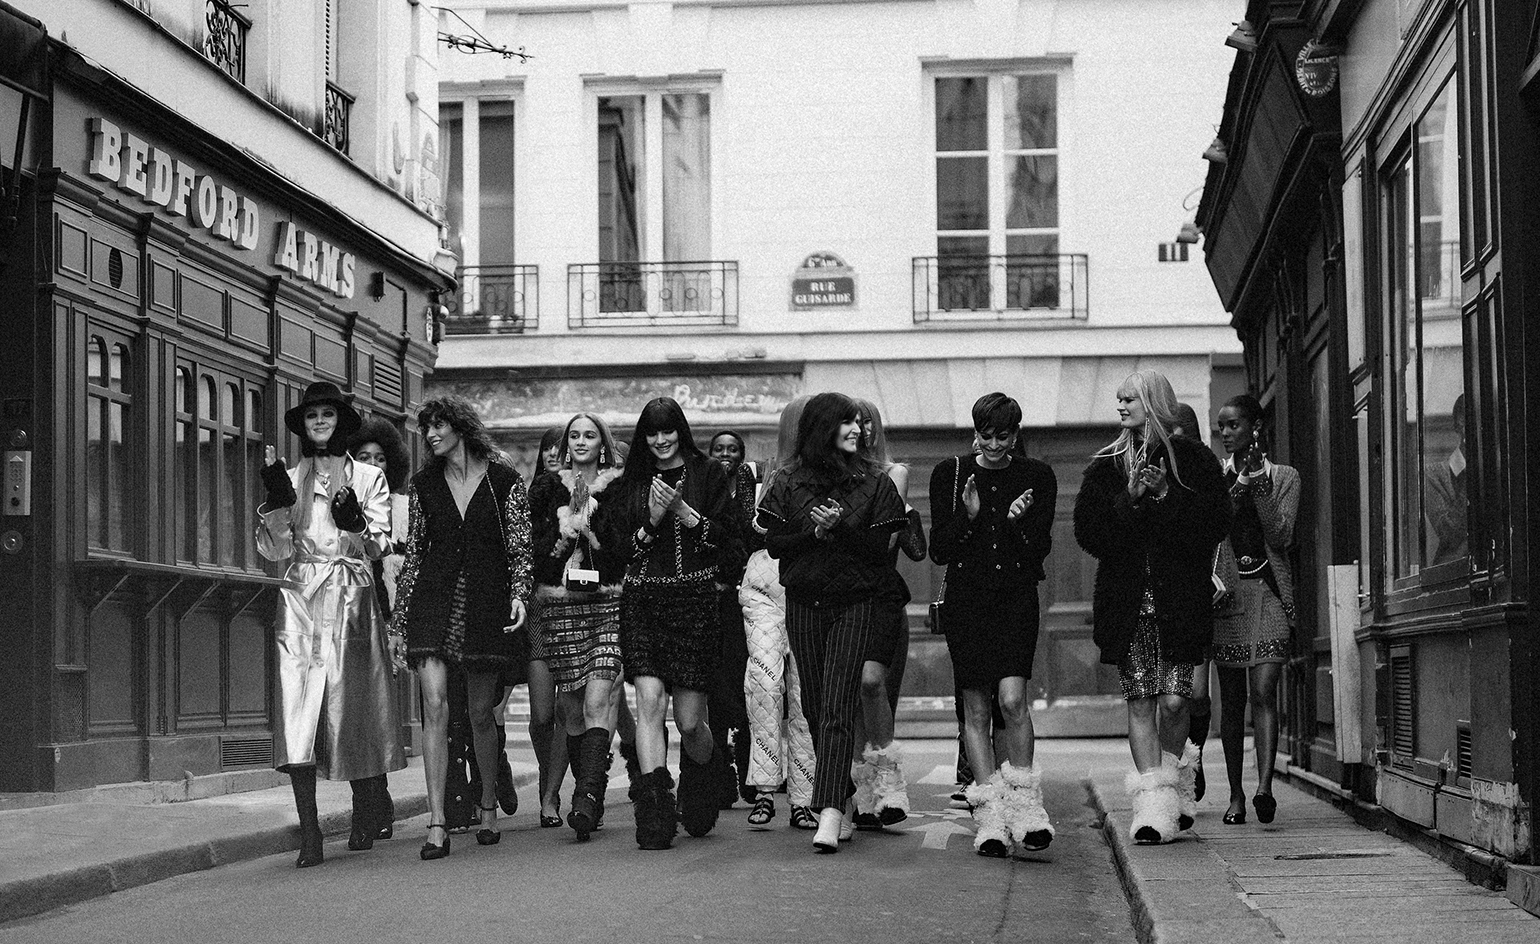 Louis Vuitton: An ultra-stylish odyssey to close the virtual Paris